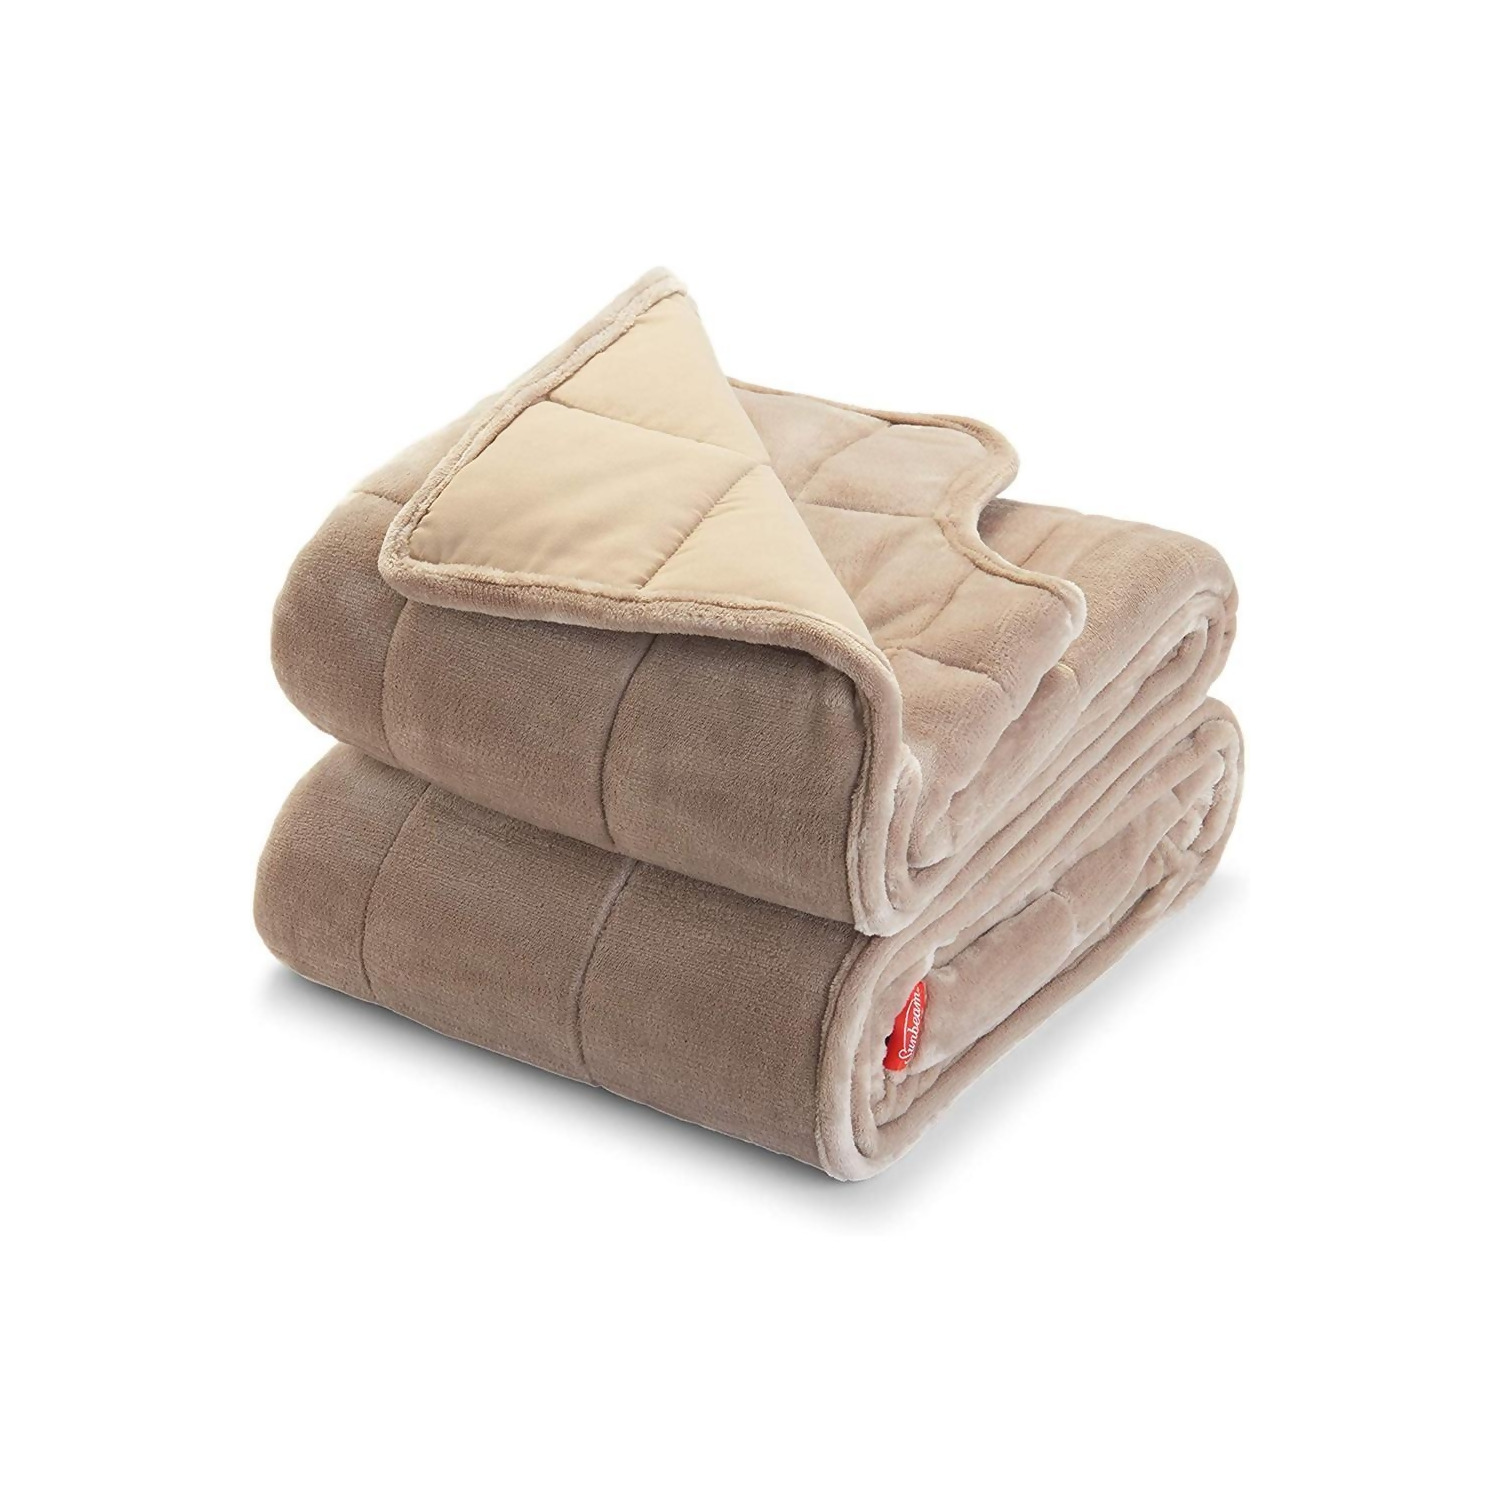 Sunbeam Warm Weighted Blanket | 15 Pounds, Reversible Plush Velvet/Microfiber with Arm Slits 54” x 73”, Mushroom